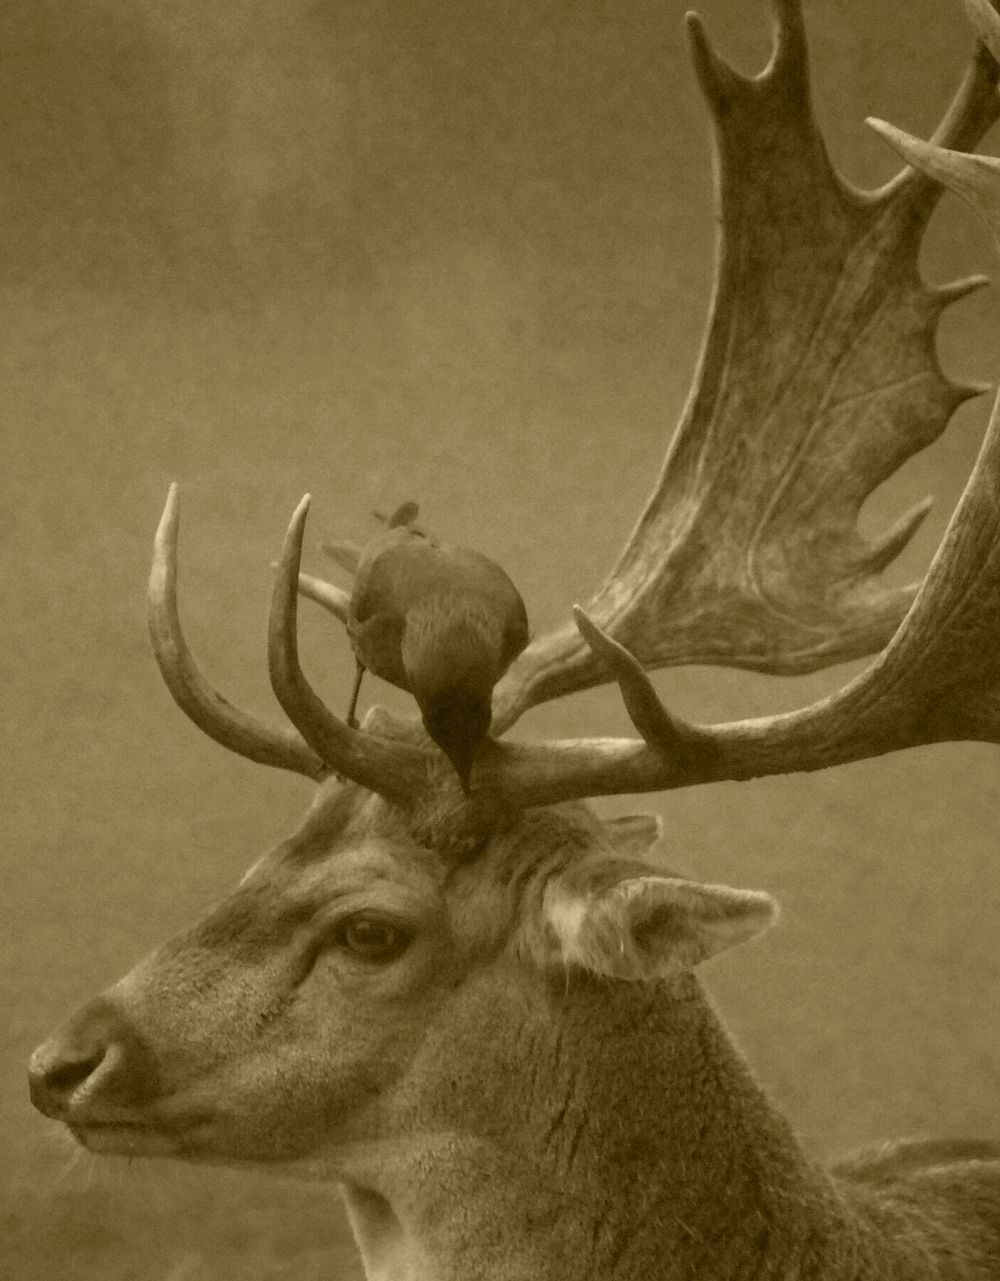 Free bird sitting on elk antler image, public domain animal CC0 photo.